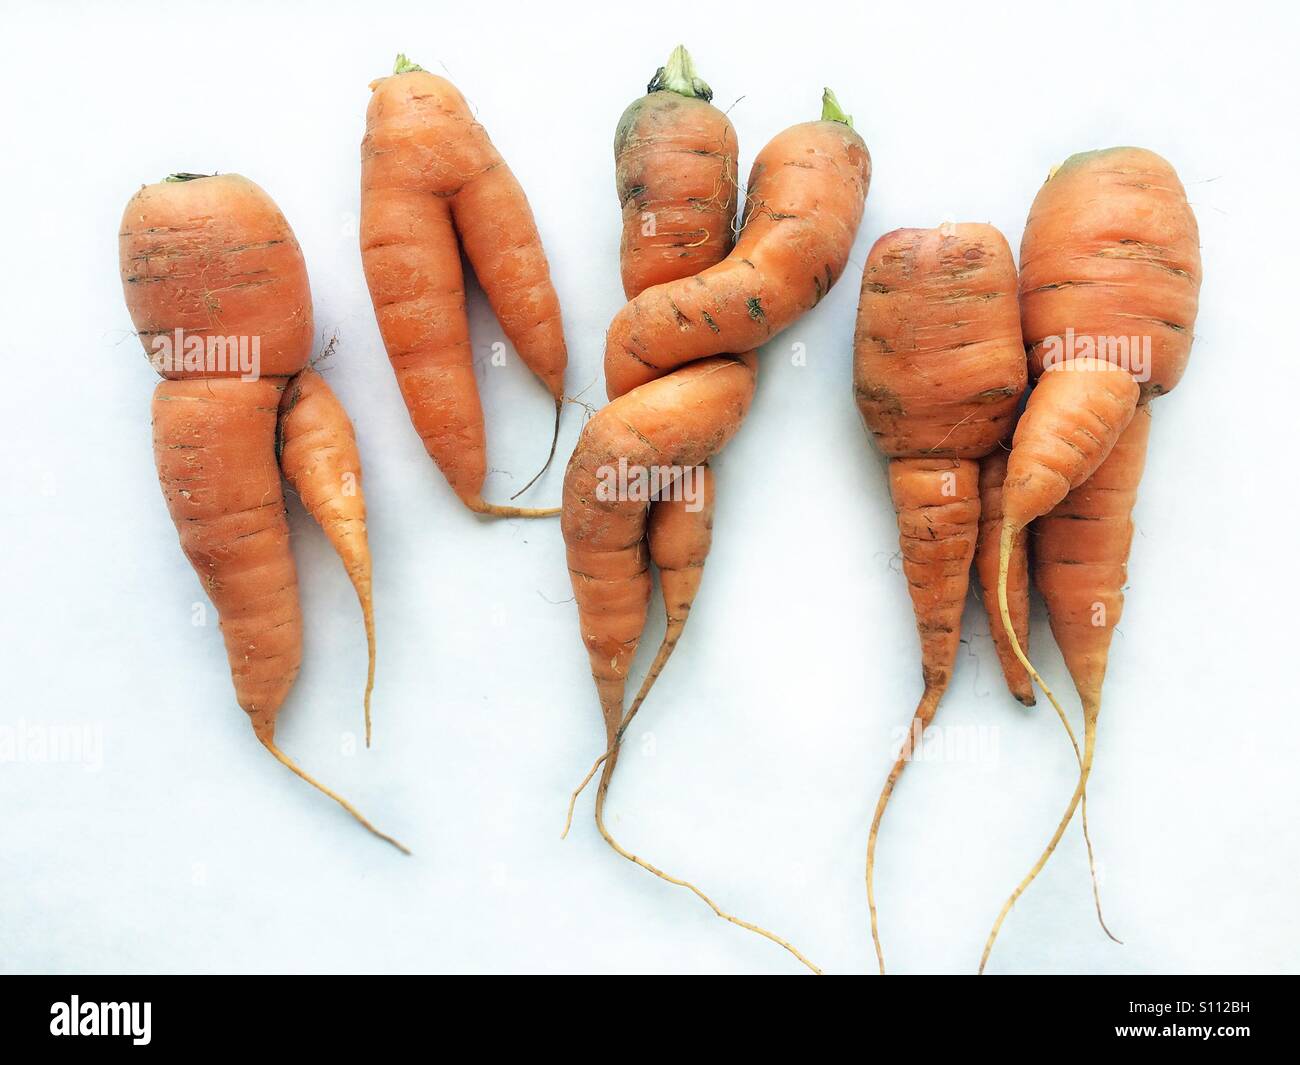 Odd shaped carrots on white cardboard background Stock Photo